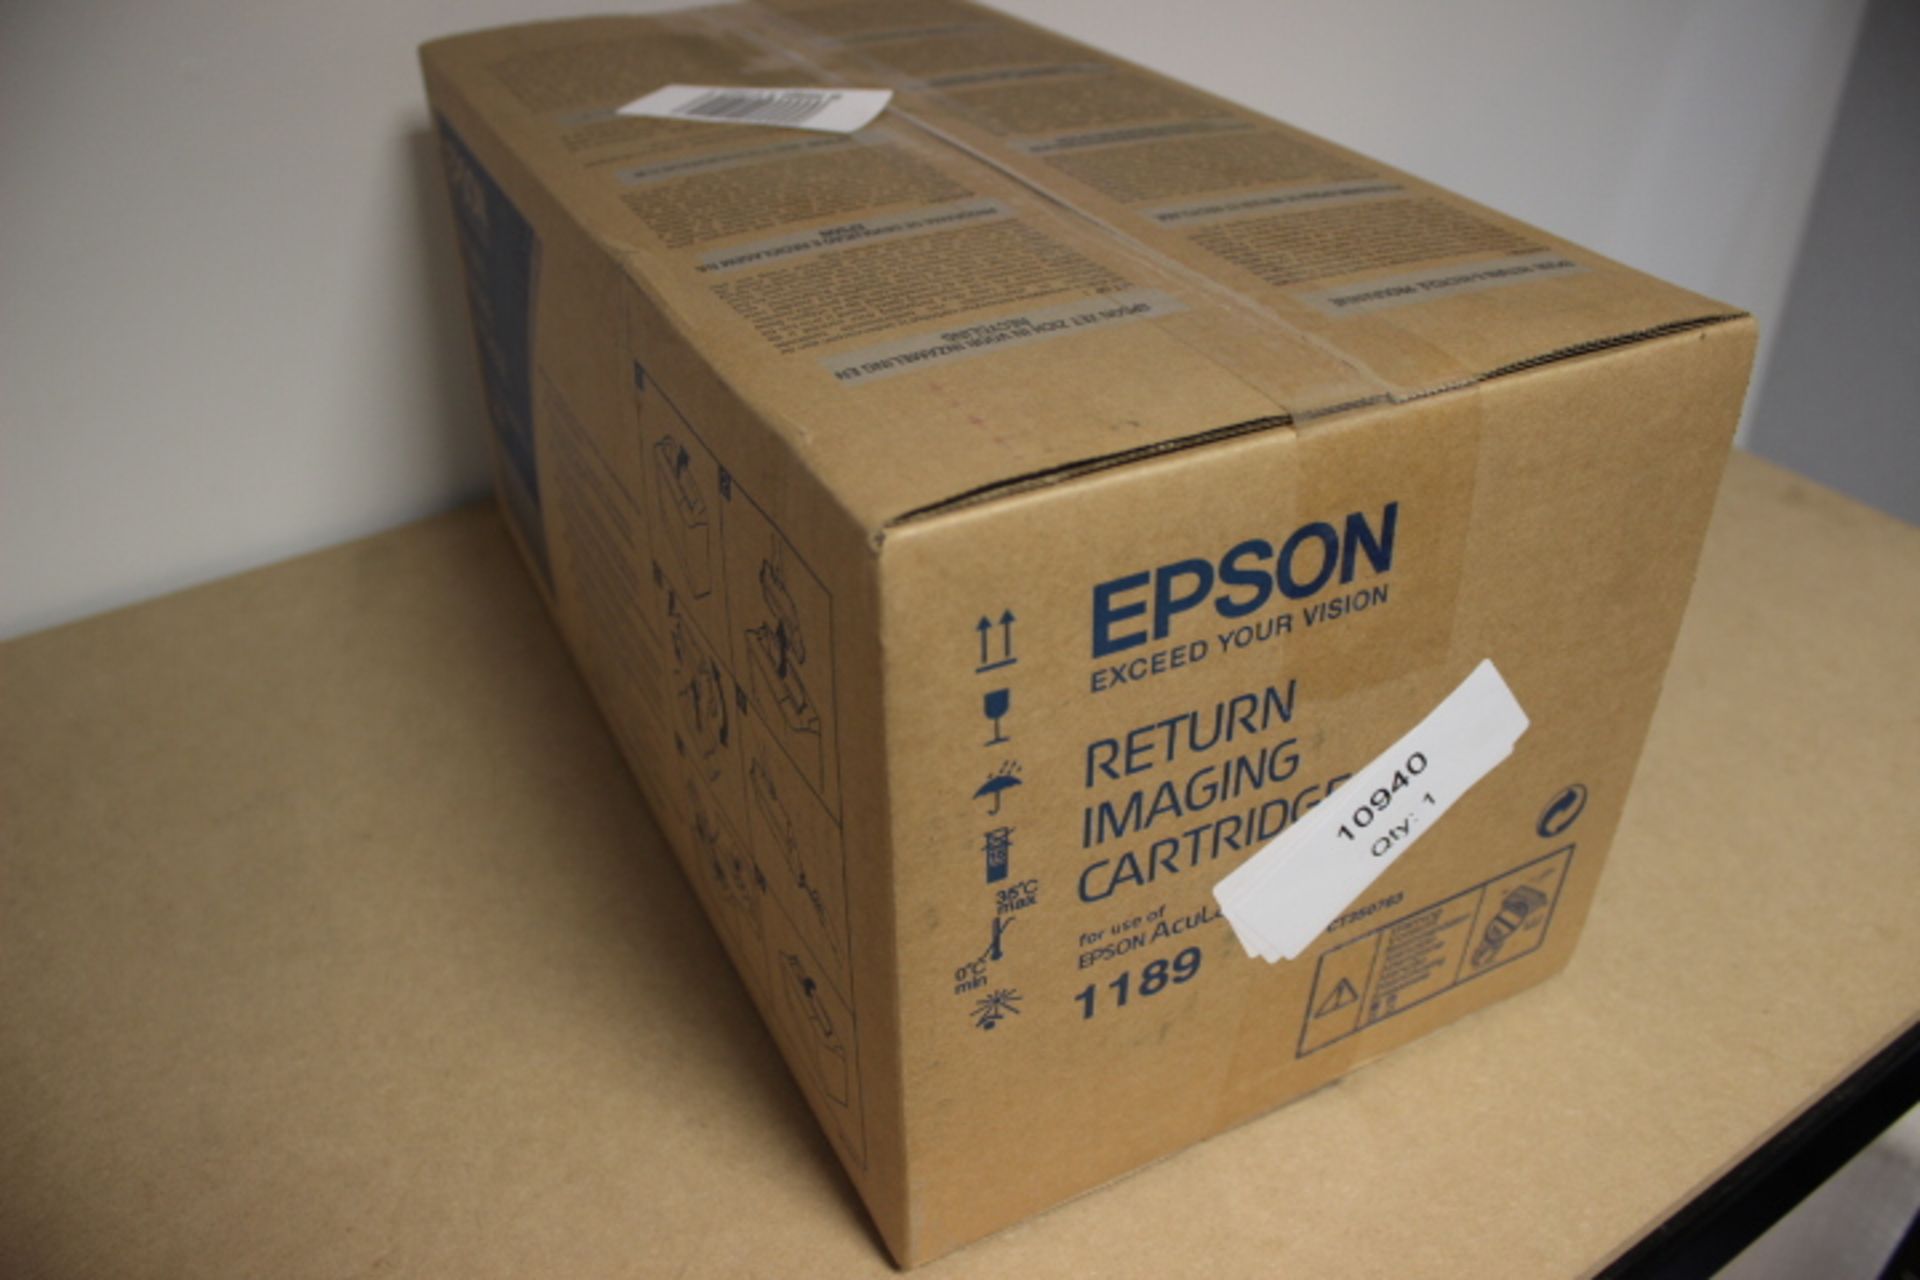 1x Epson Return Imaging Cartridge 1189Grade A